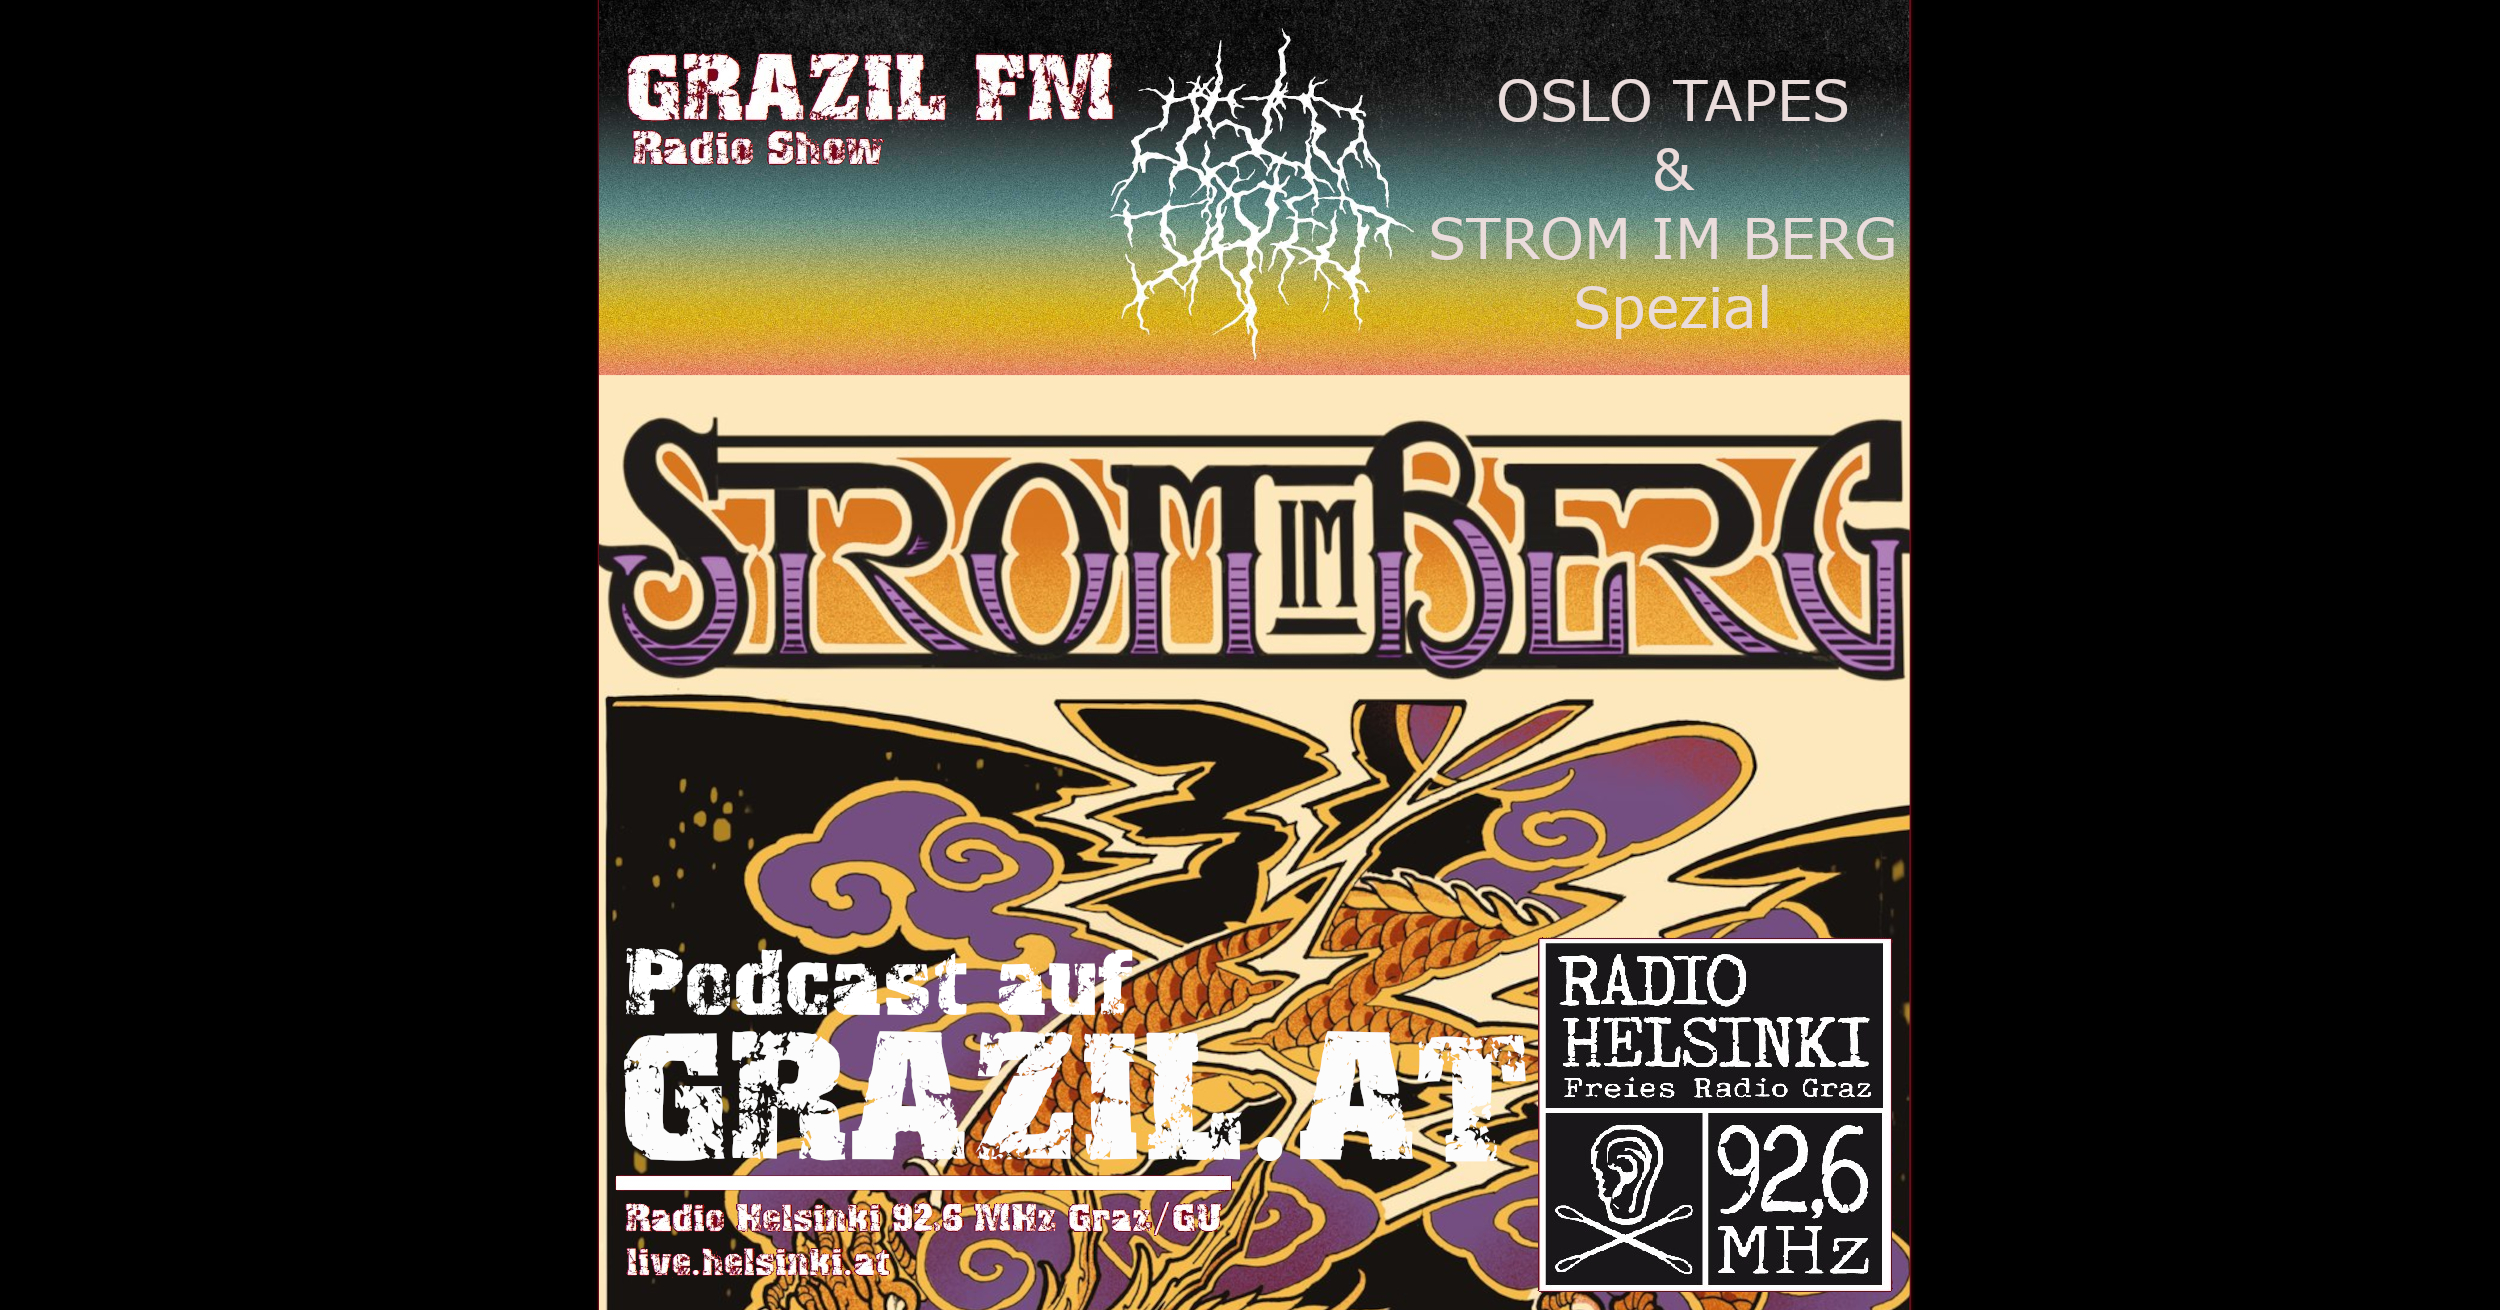 grazil FM Strom in Berg und Oslo Tapes Single